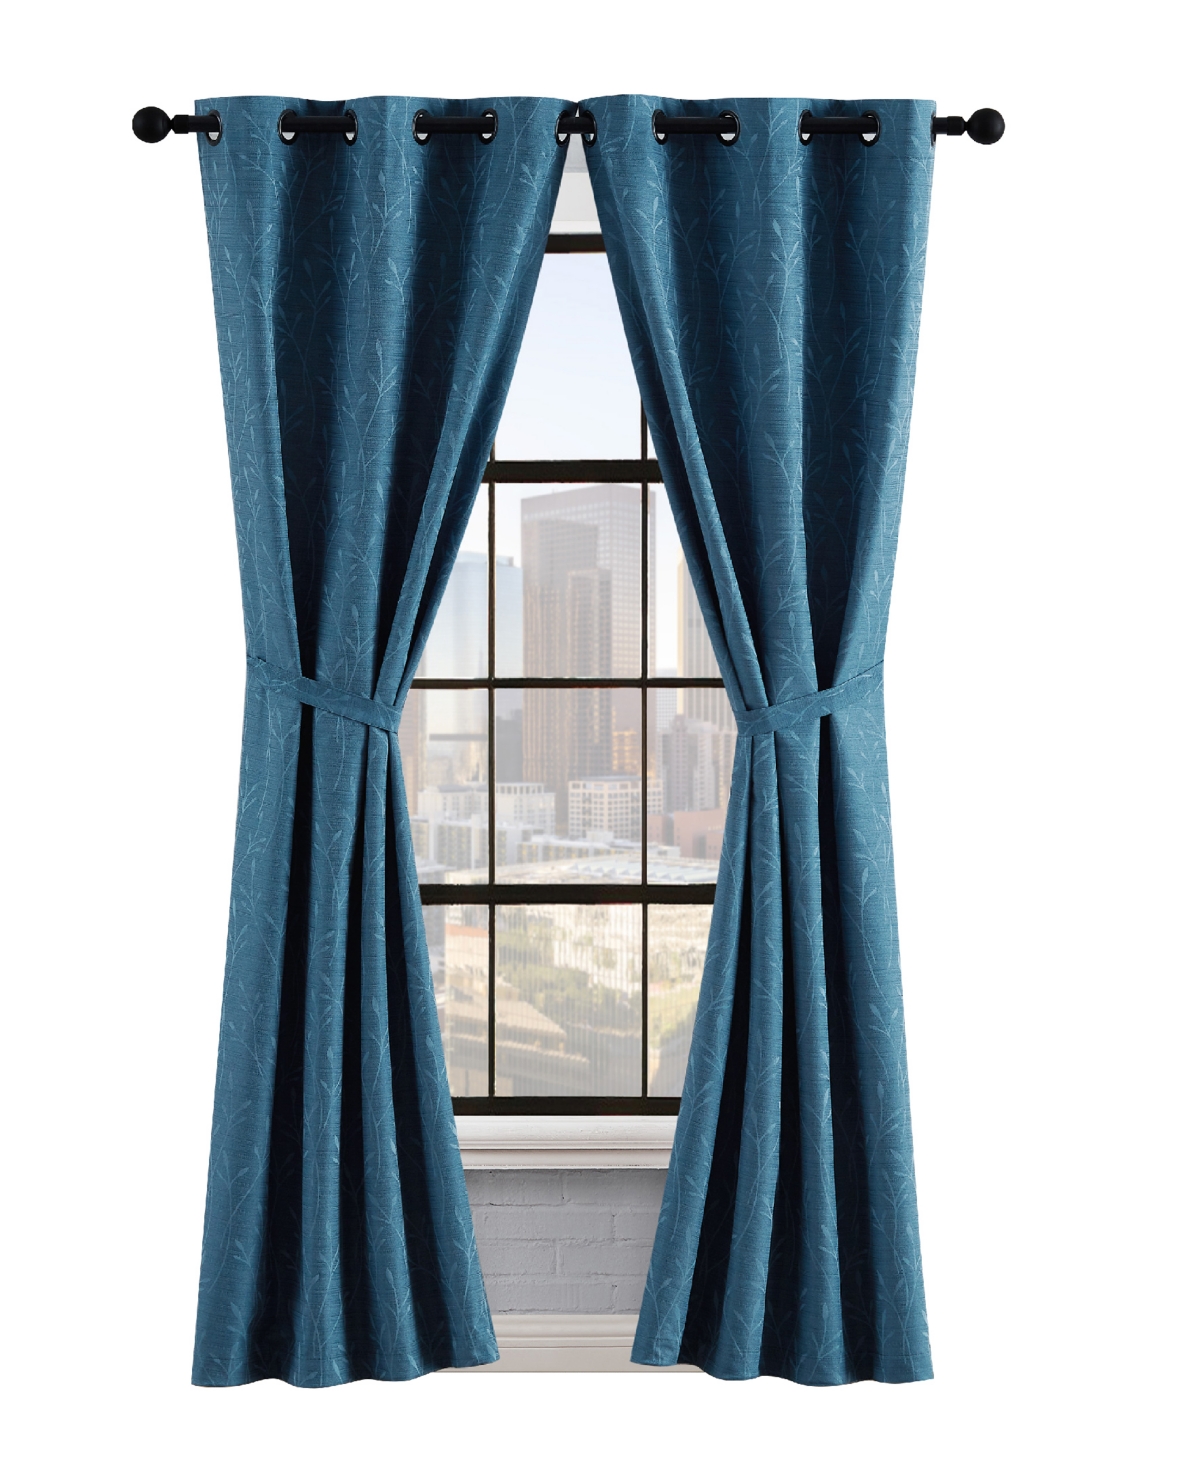 Lucky Brand Sondra Textured Leaf Pattern Blackout Grommet Window Curtain Panel Pair With Tiebacks, 38" X 84" In Denim Blue